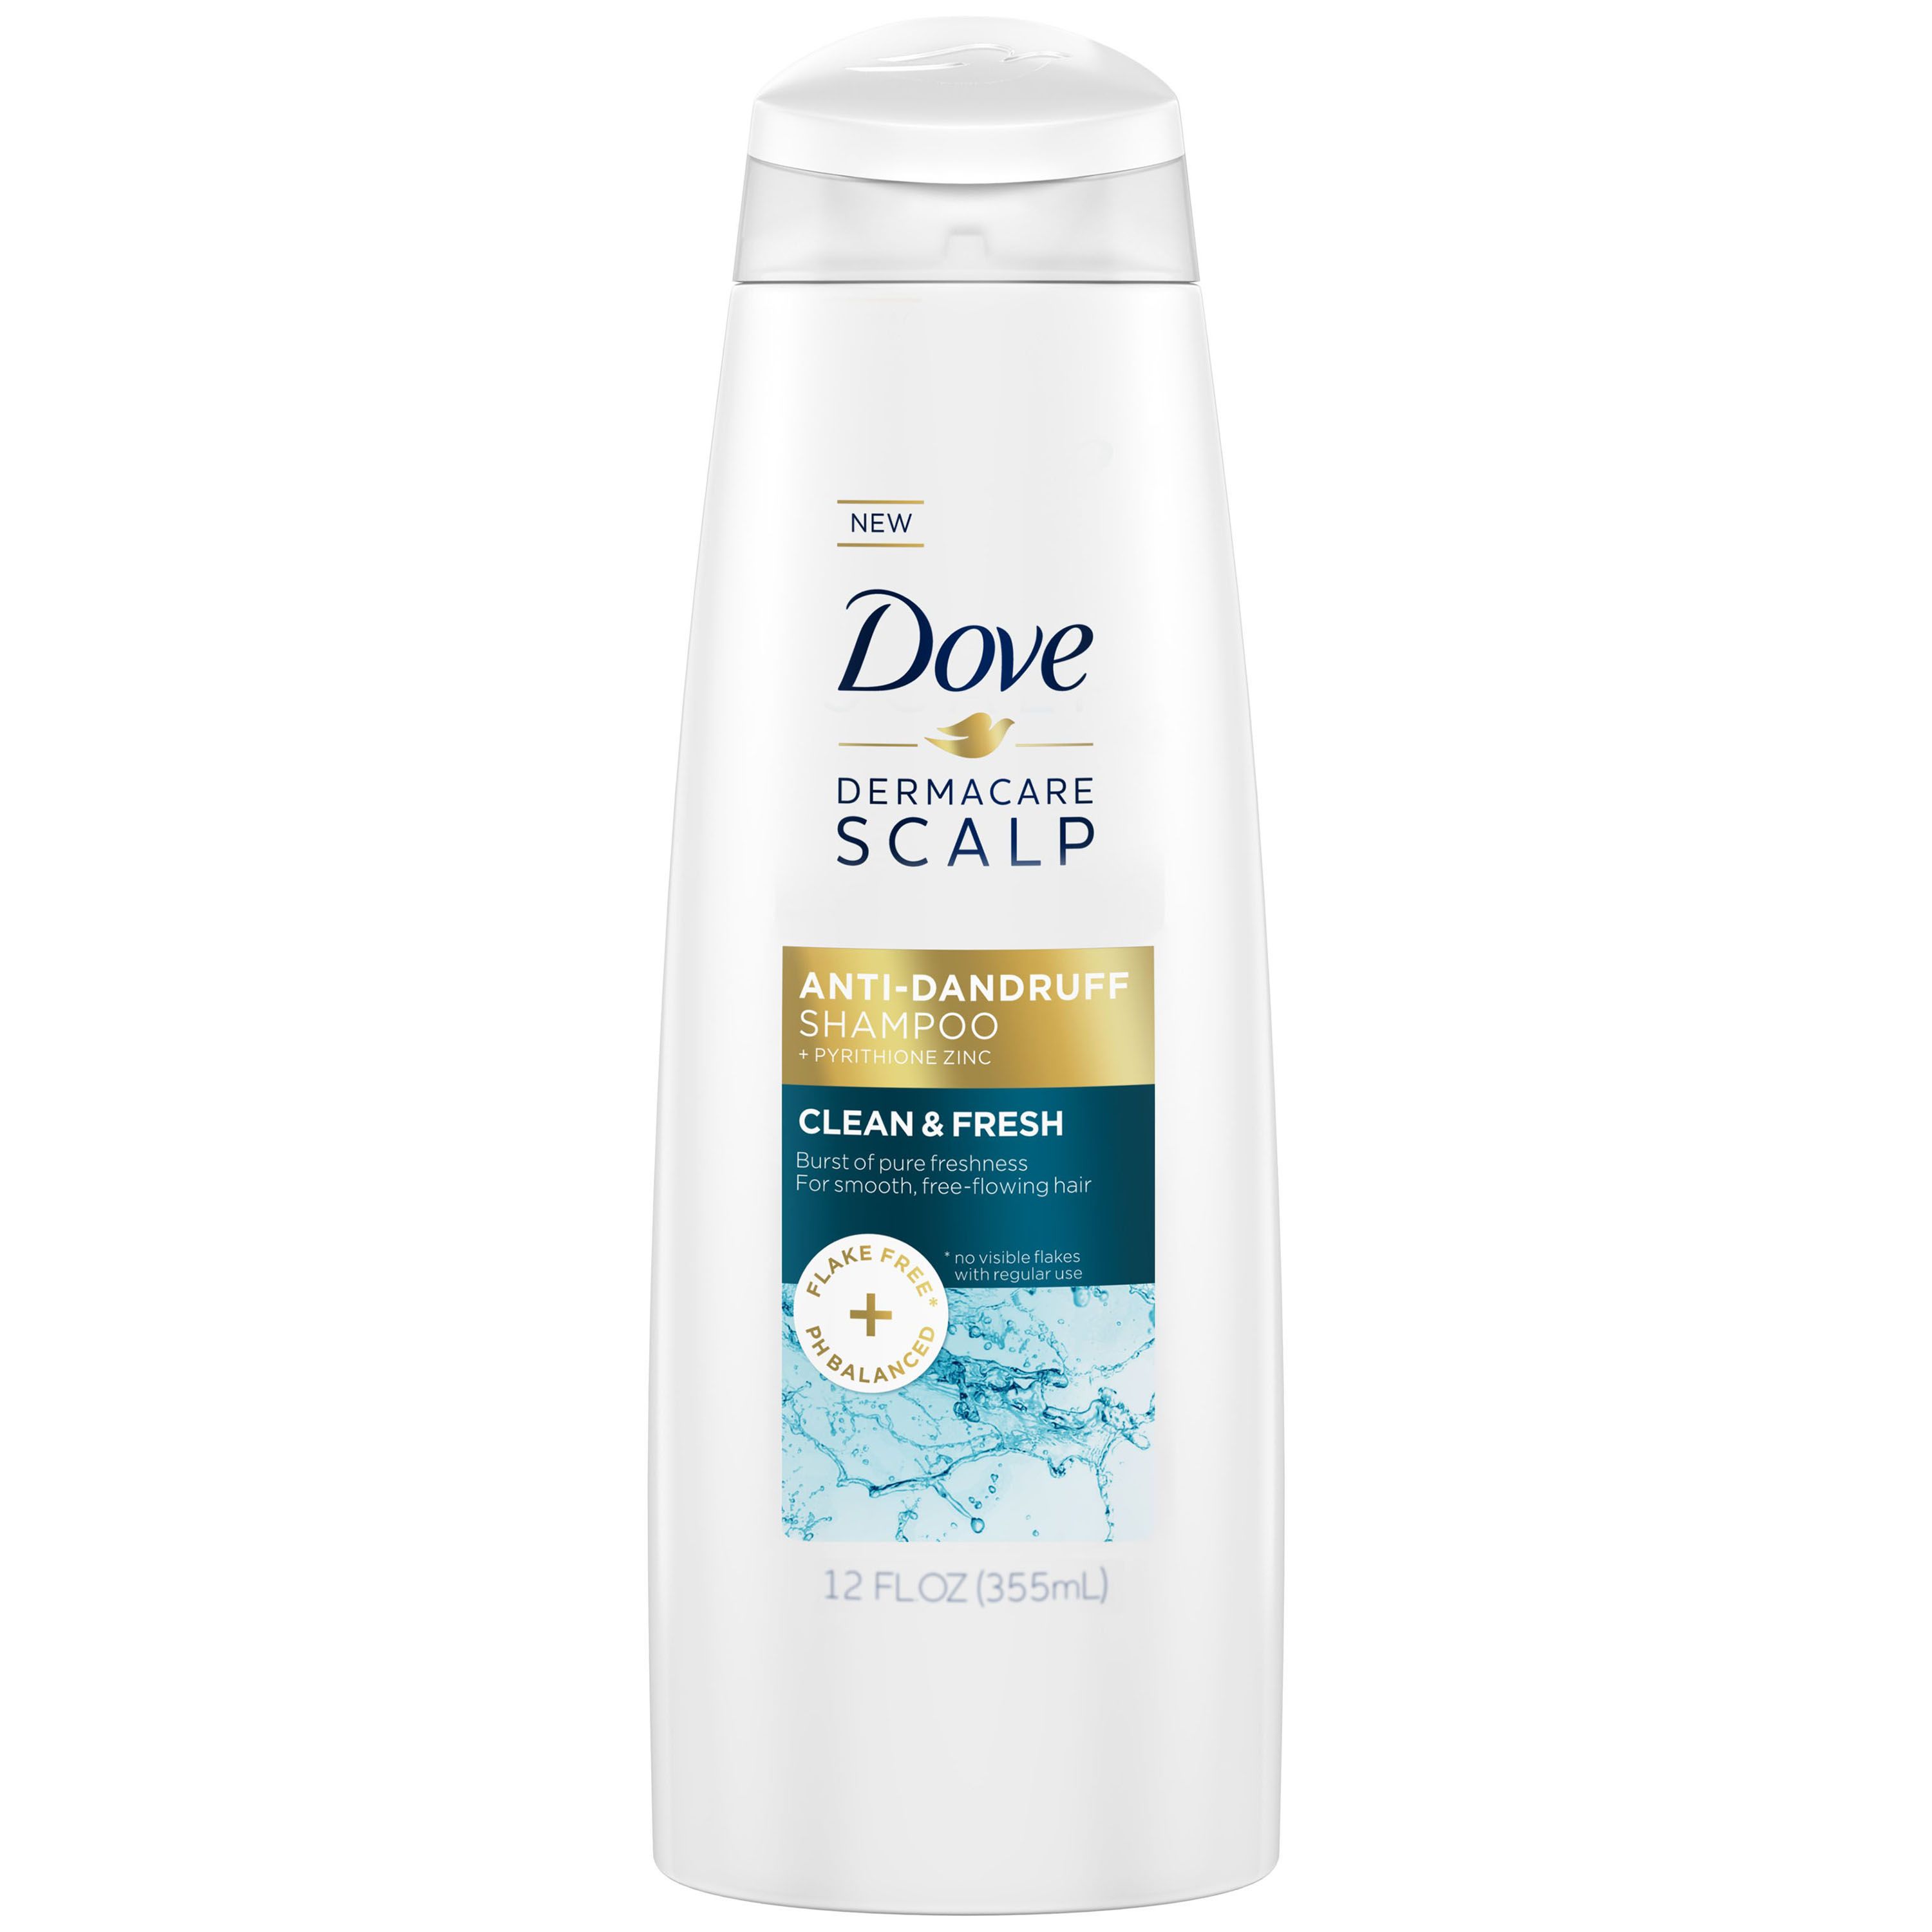 Dove Dermacare Scalp Clean & Fresh Anti-Dandruff Shampoo